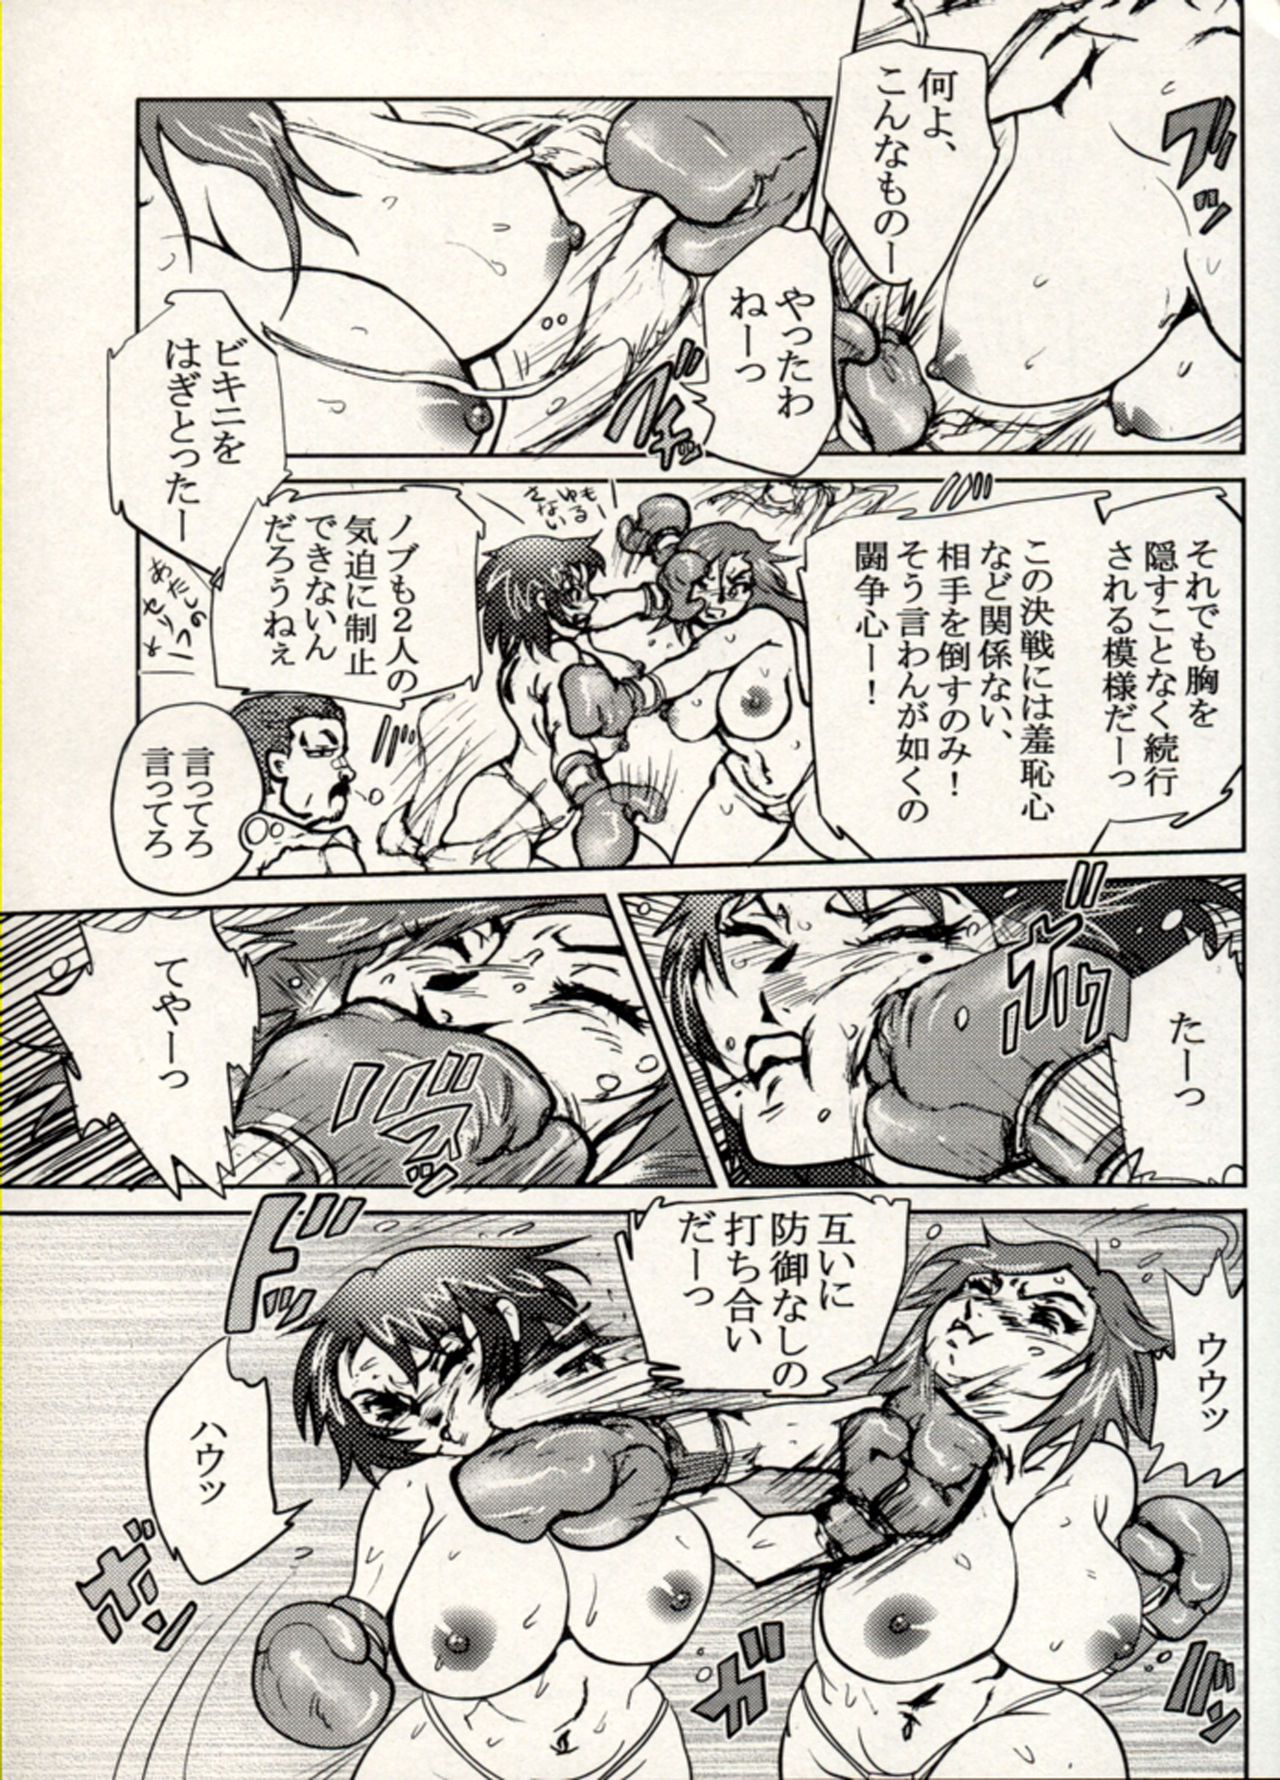 Manga Battle Volume 15 27